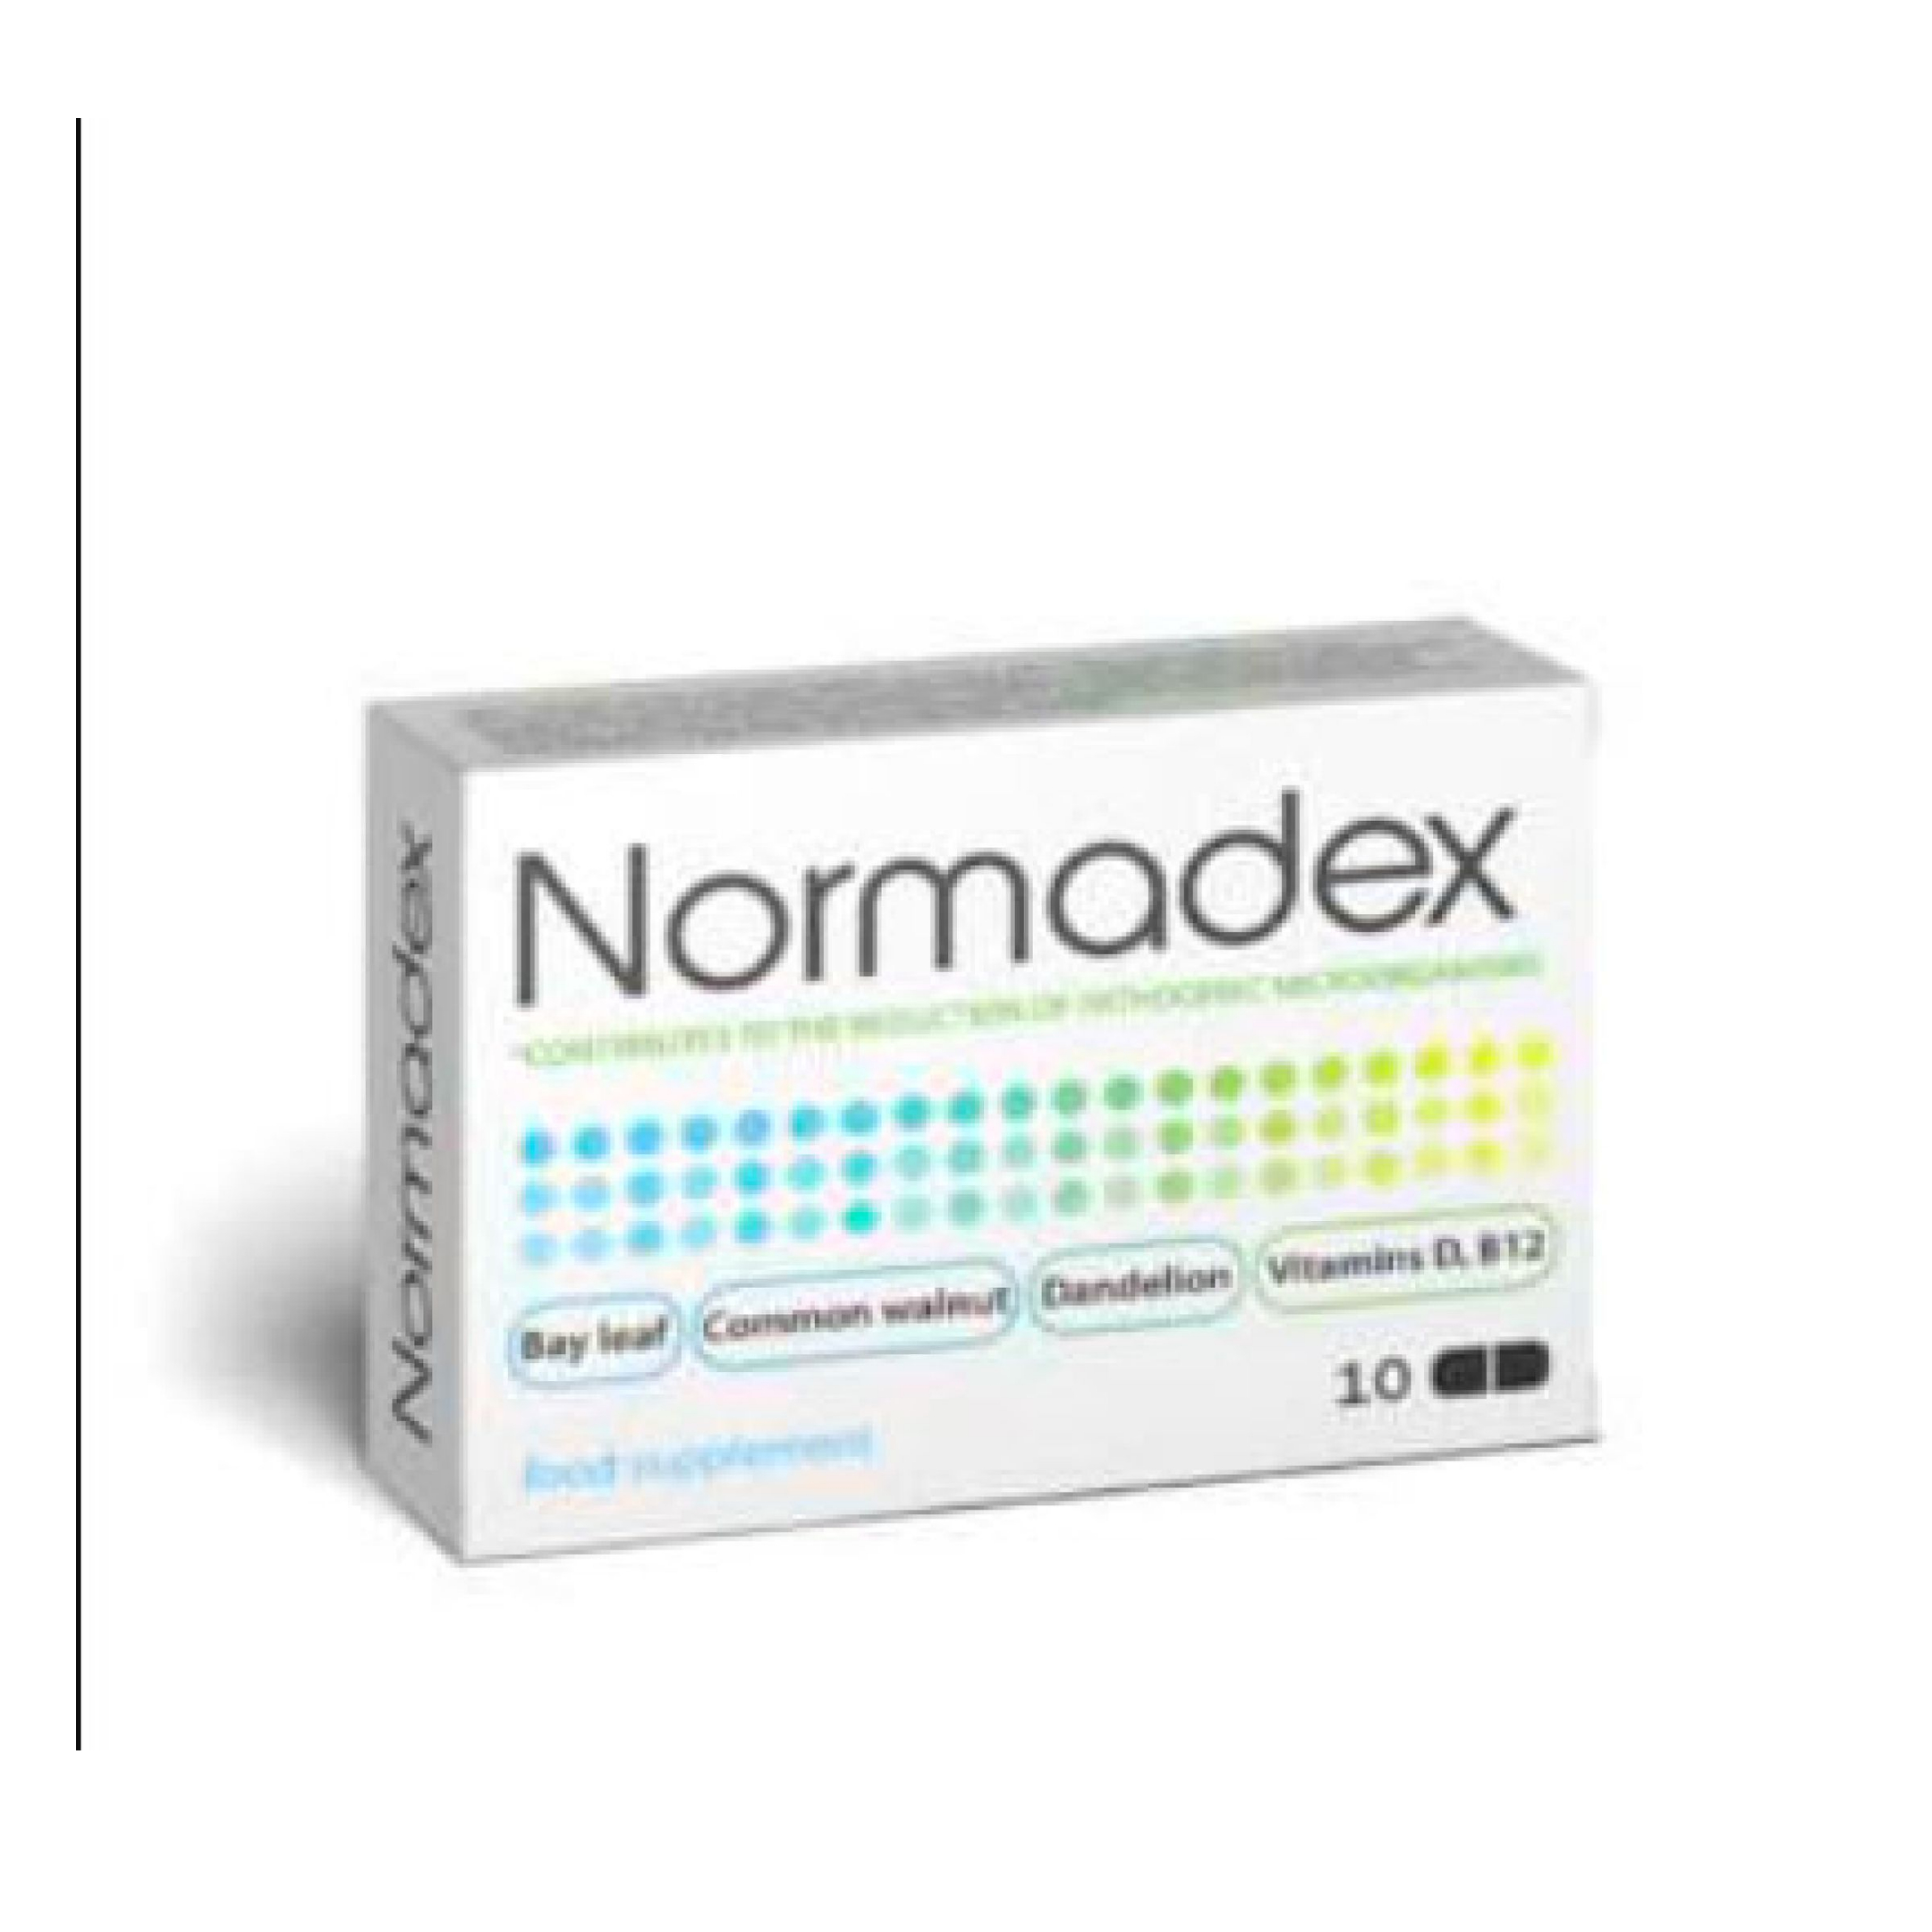 Normadex vs. Parazitol